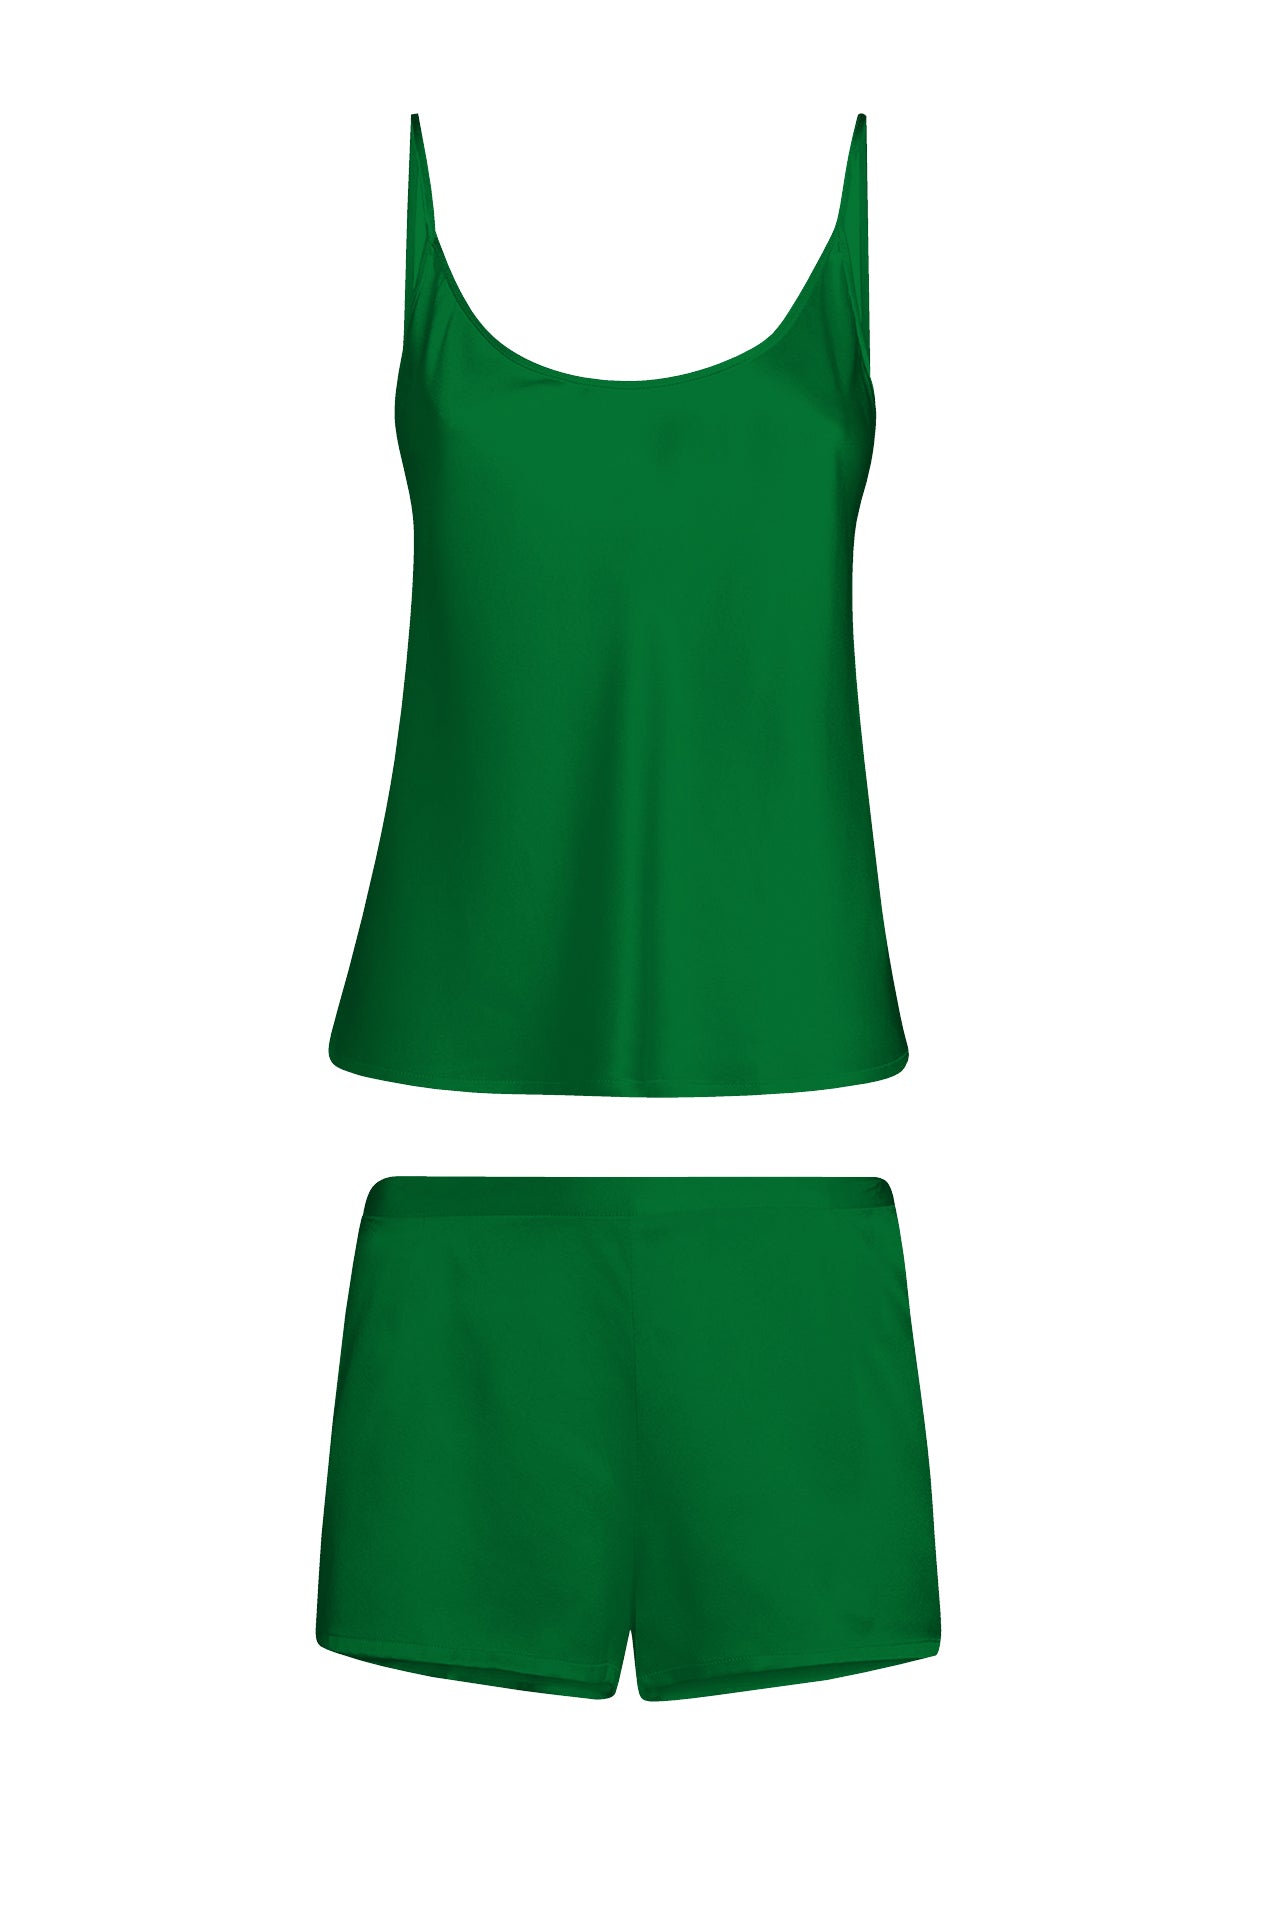 "summer cami tops" "Kyle X Shahida"  "green camisole" "dressy camisole tops"